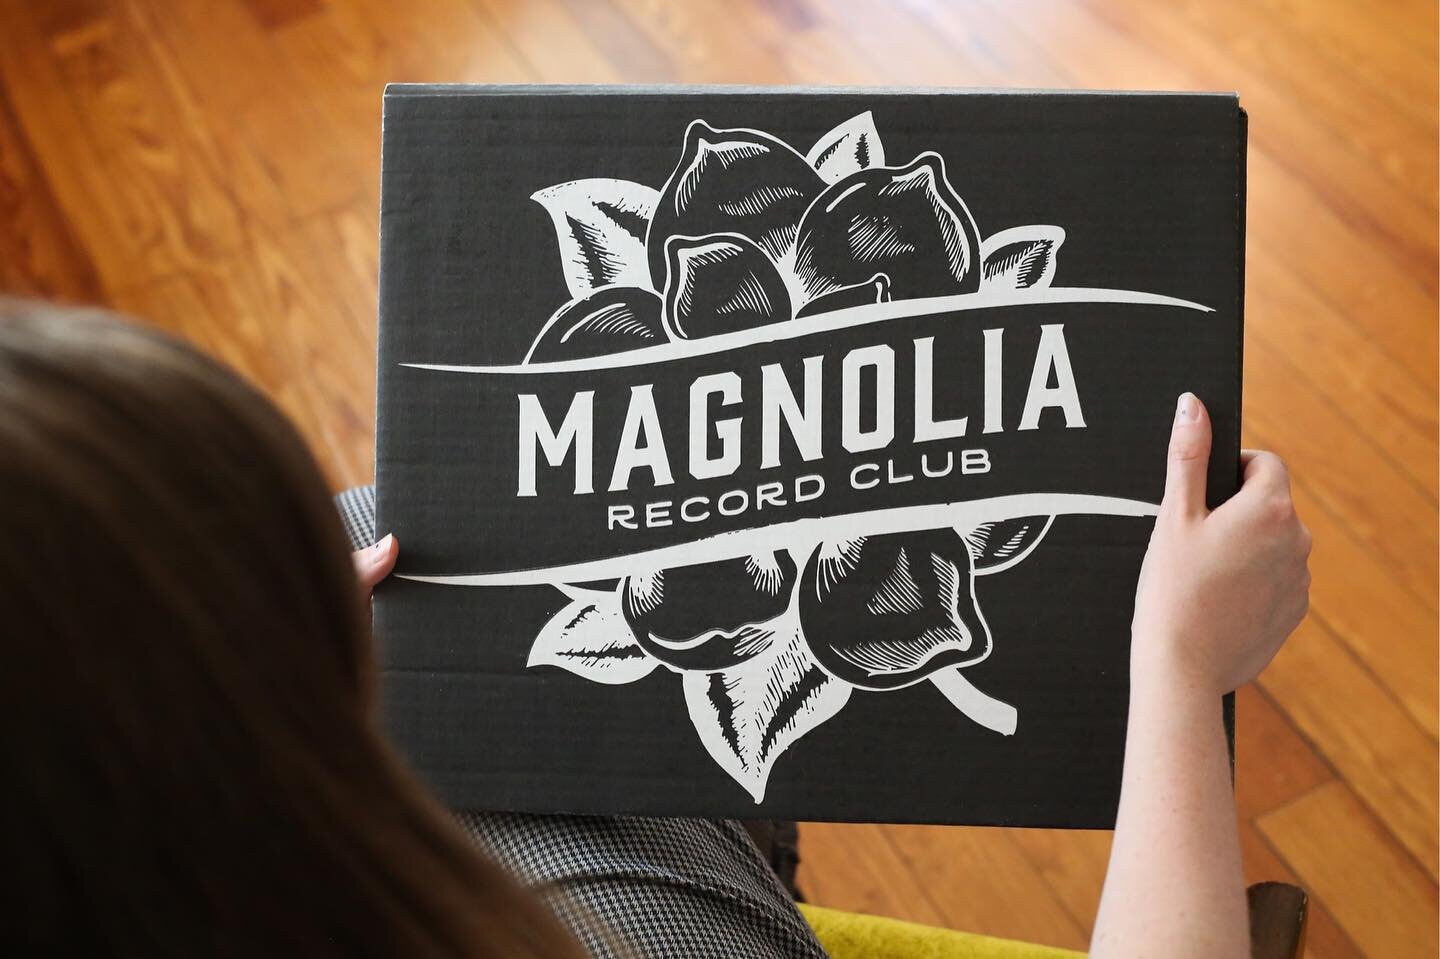 Magnolia Record Club (@magnoliarecordclub) • Instagram photos and videos